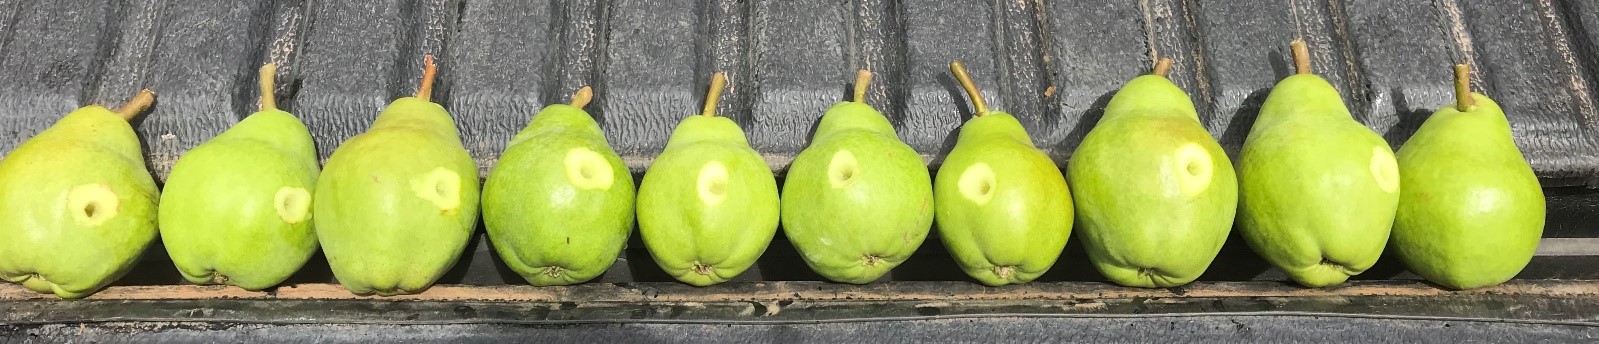 pear maturity test